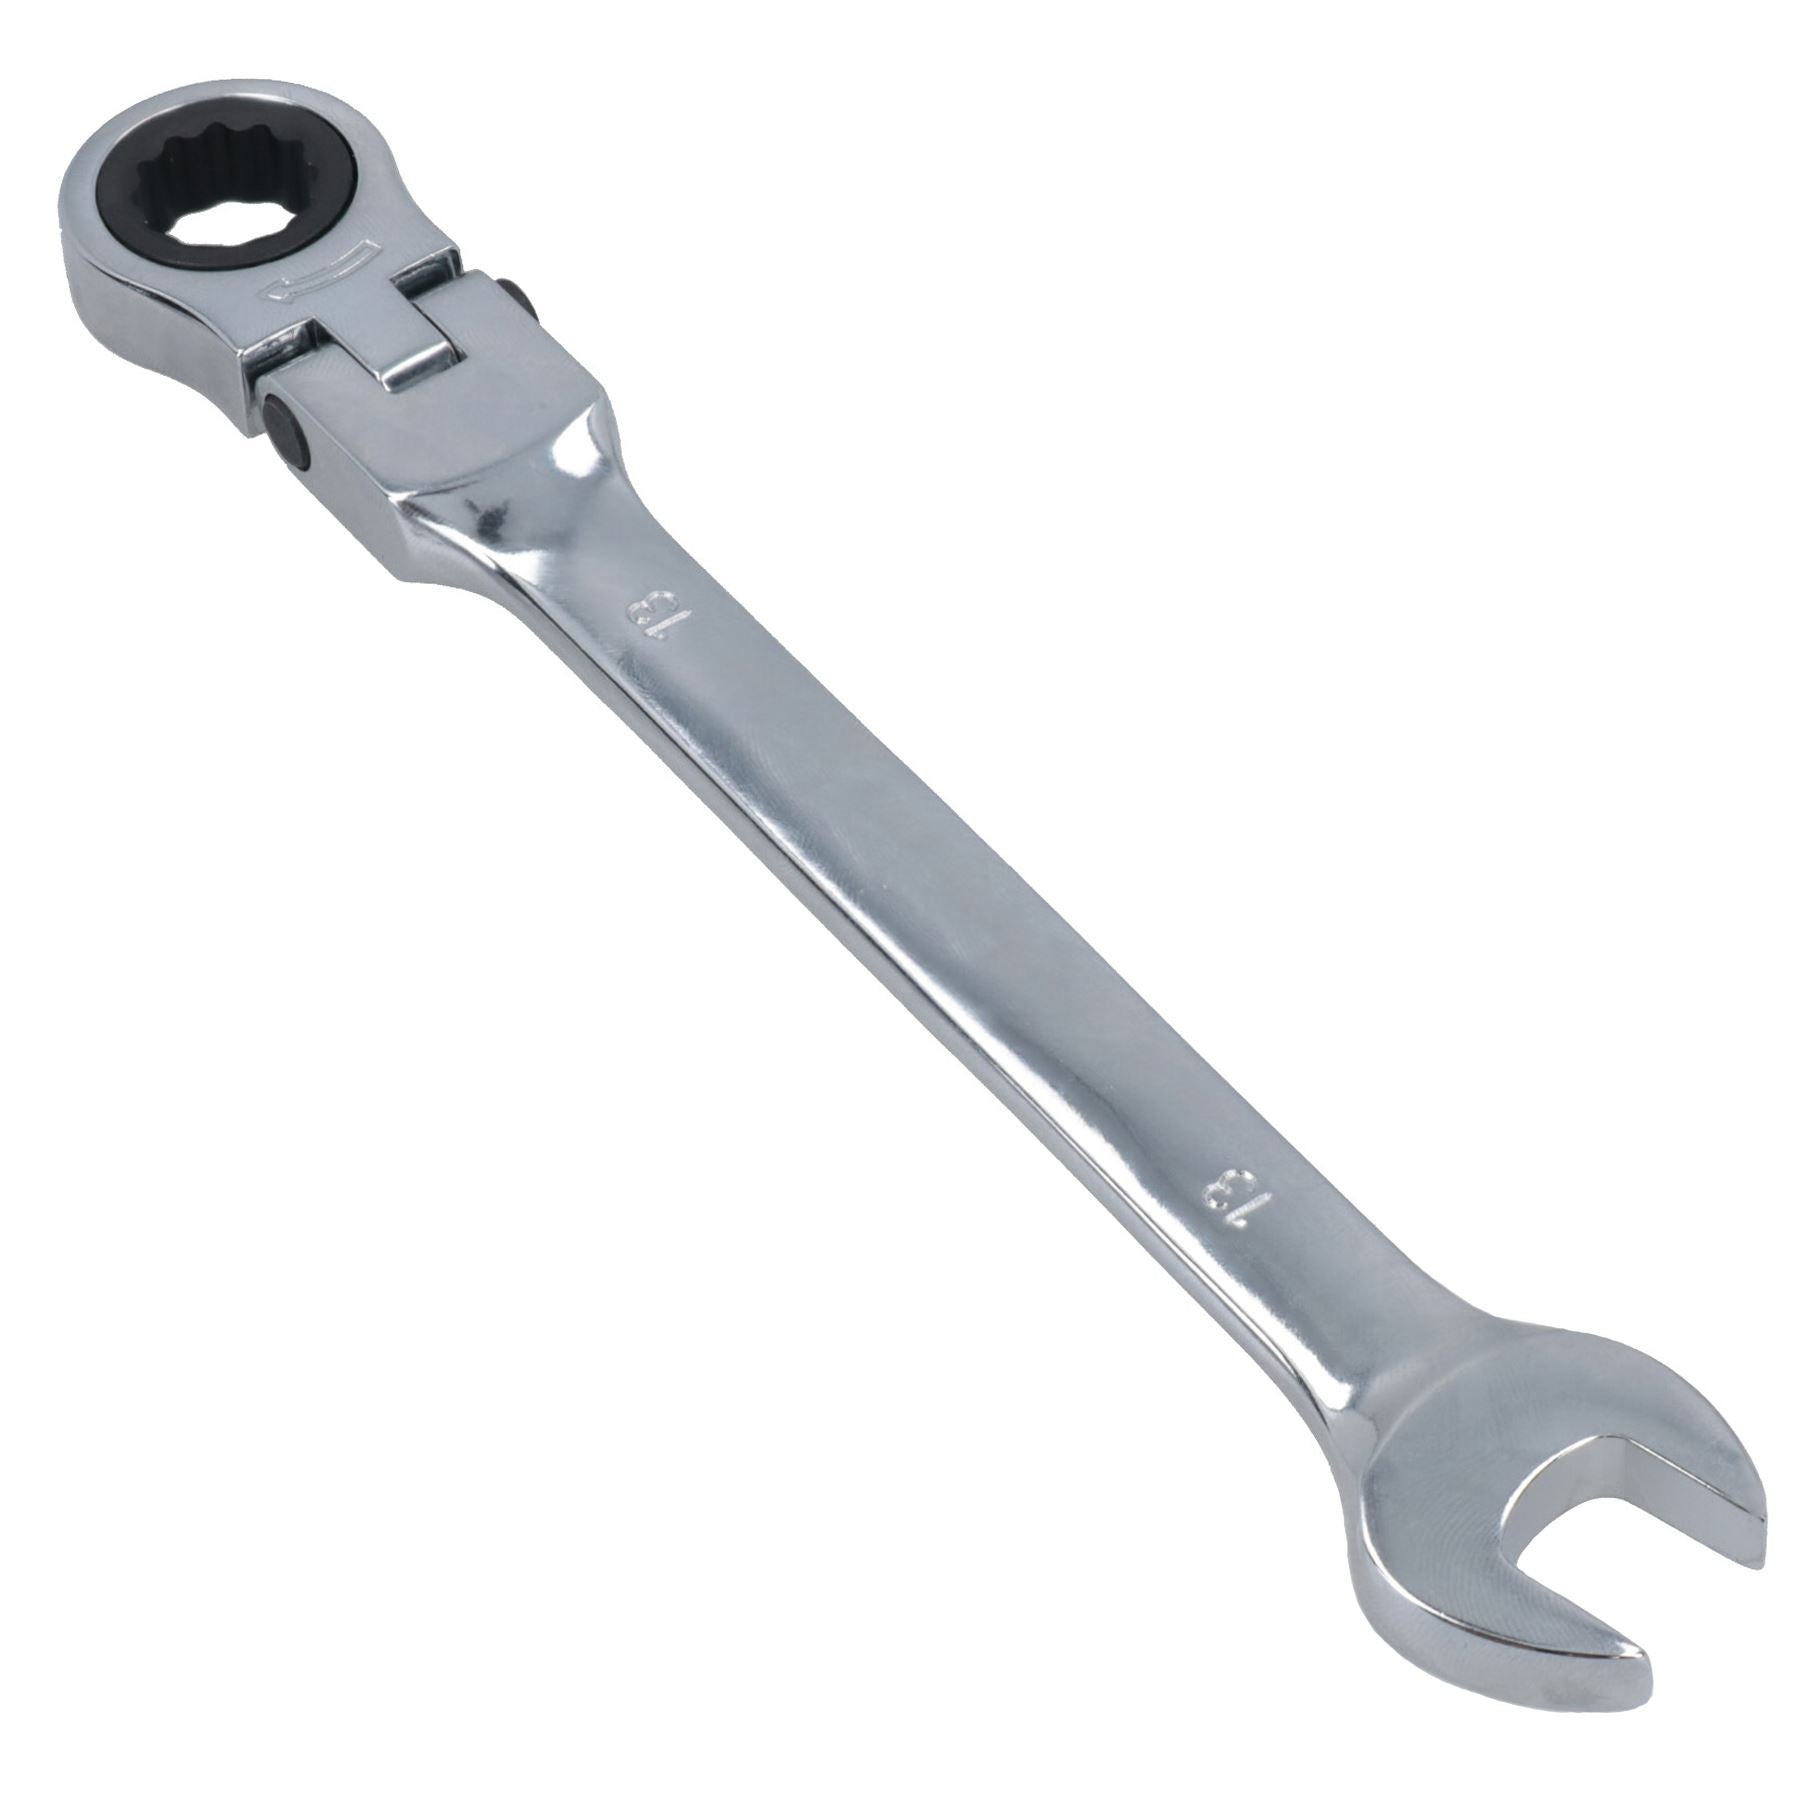 13mm Flexible Headed Ratchet Spanner Wrench Lockable Head 72 Teeth Bi-hex